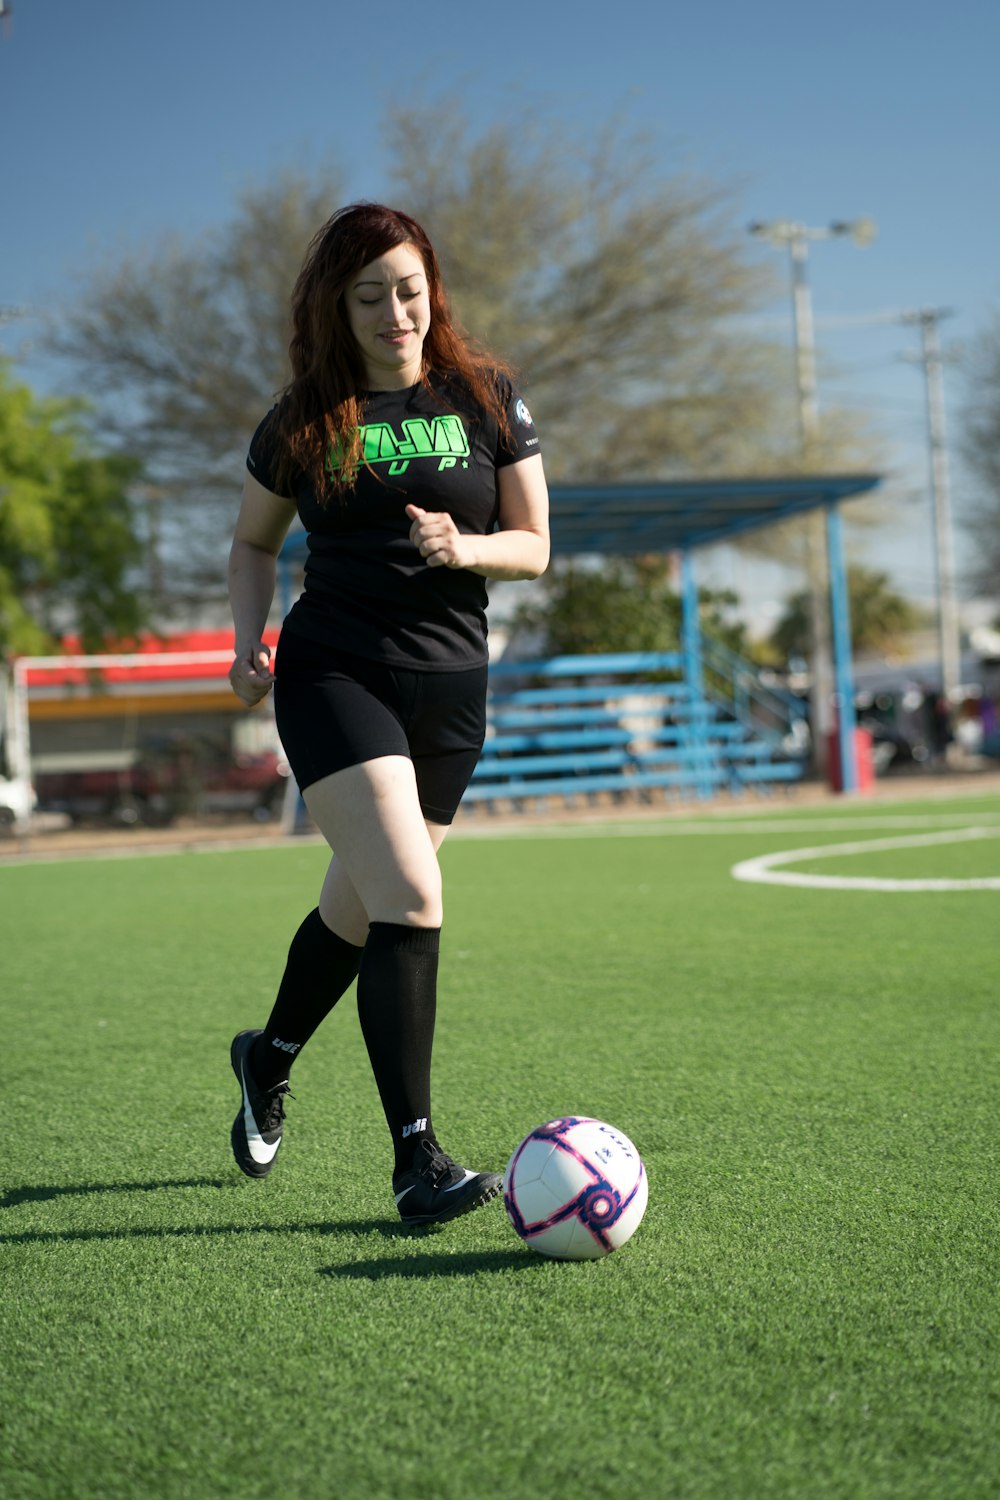 Frau im schwarz-grünen Nike-Fußballtrikot kickt Fußball auf grünem Rasenplatz während